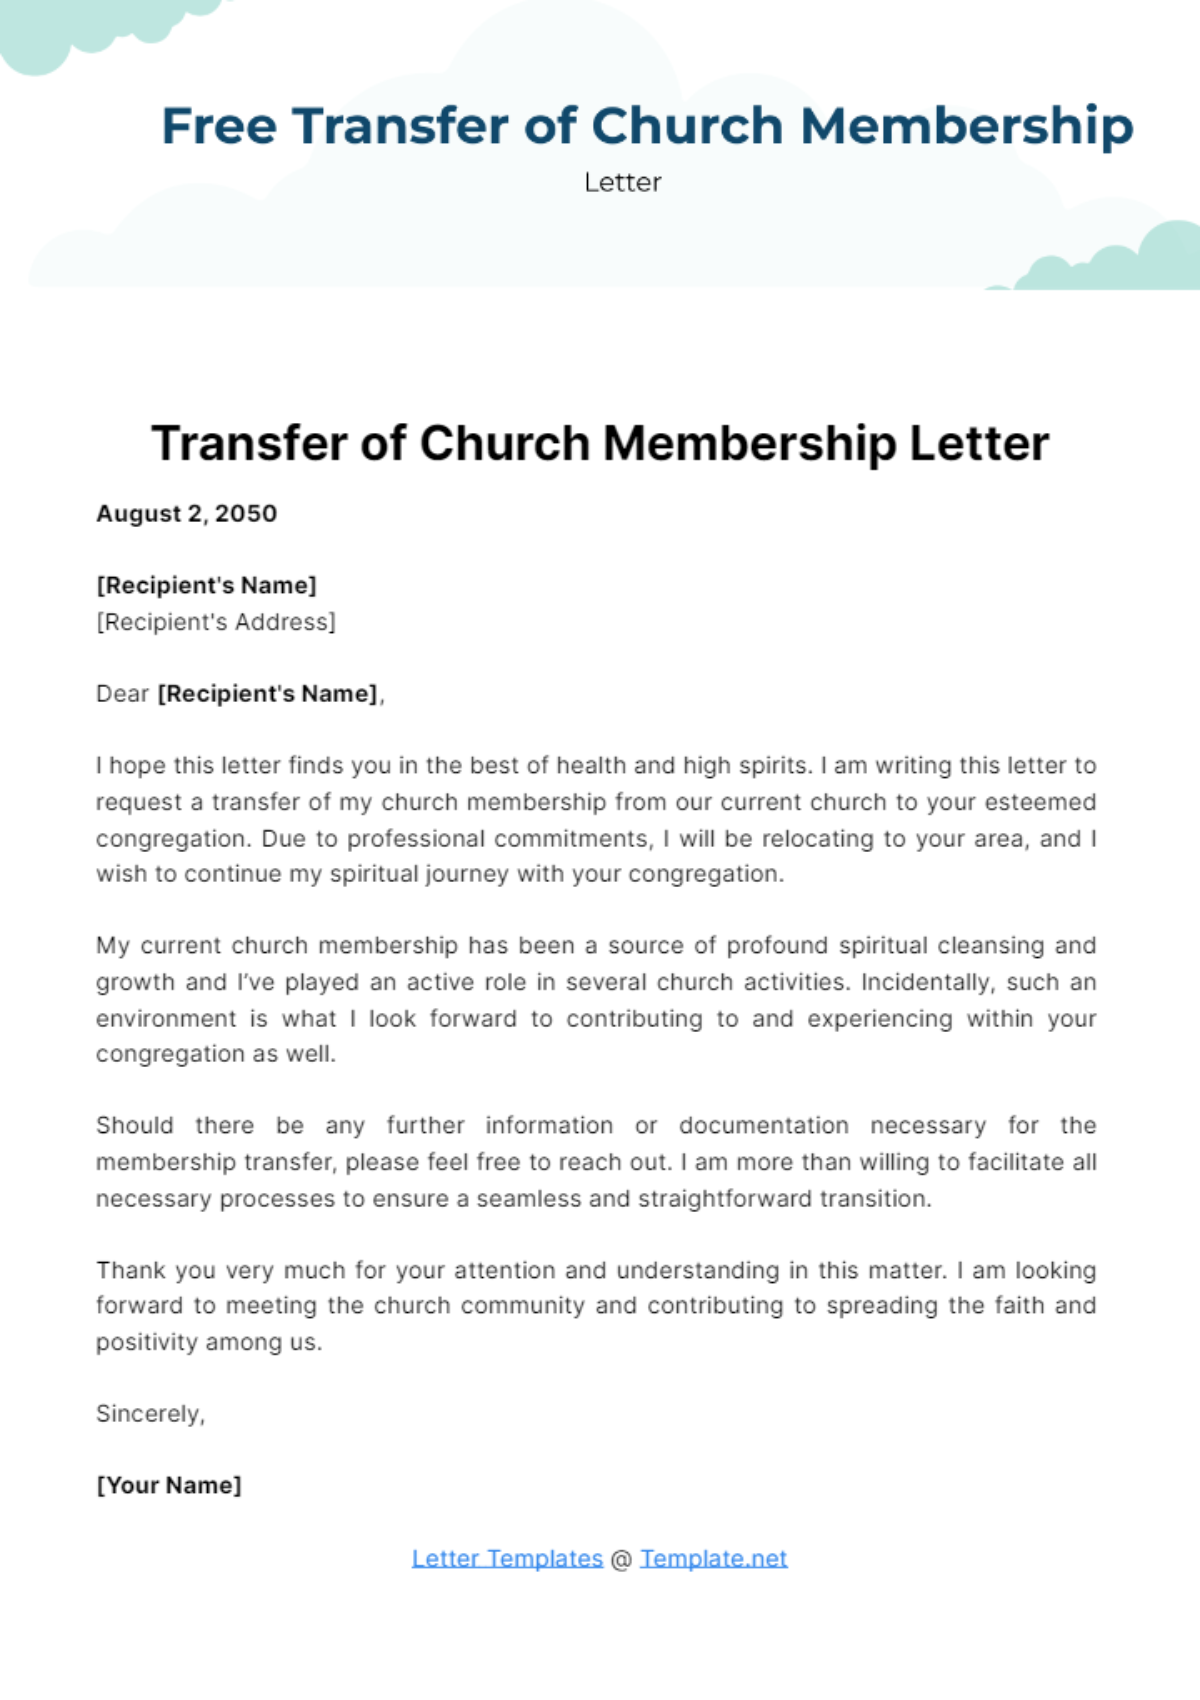 Free Transfer of Church Membership Letter Template